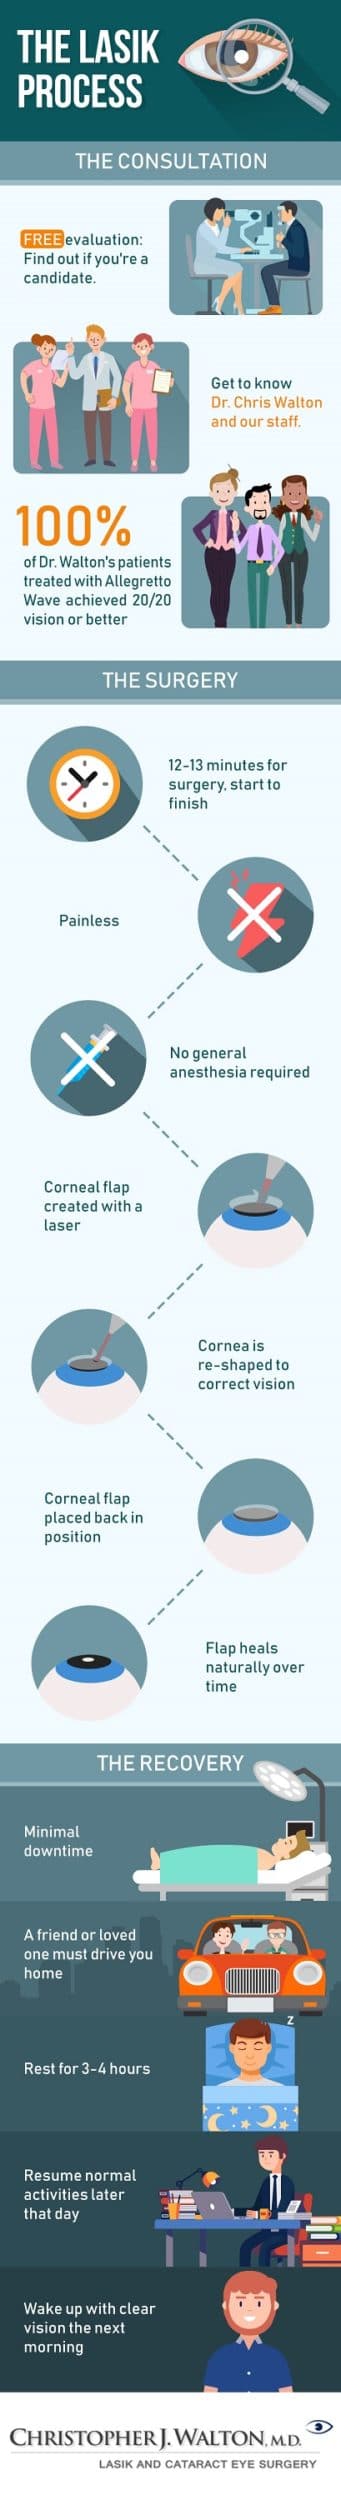 Infographic explaining the LASIK process